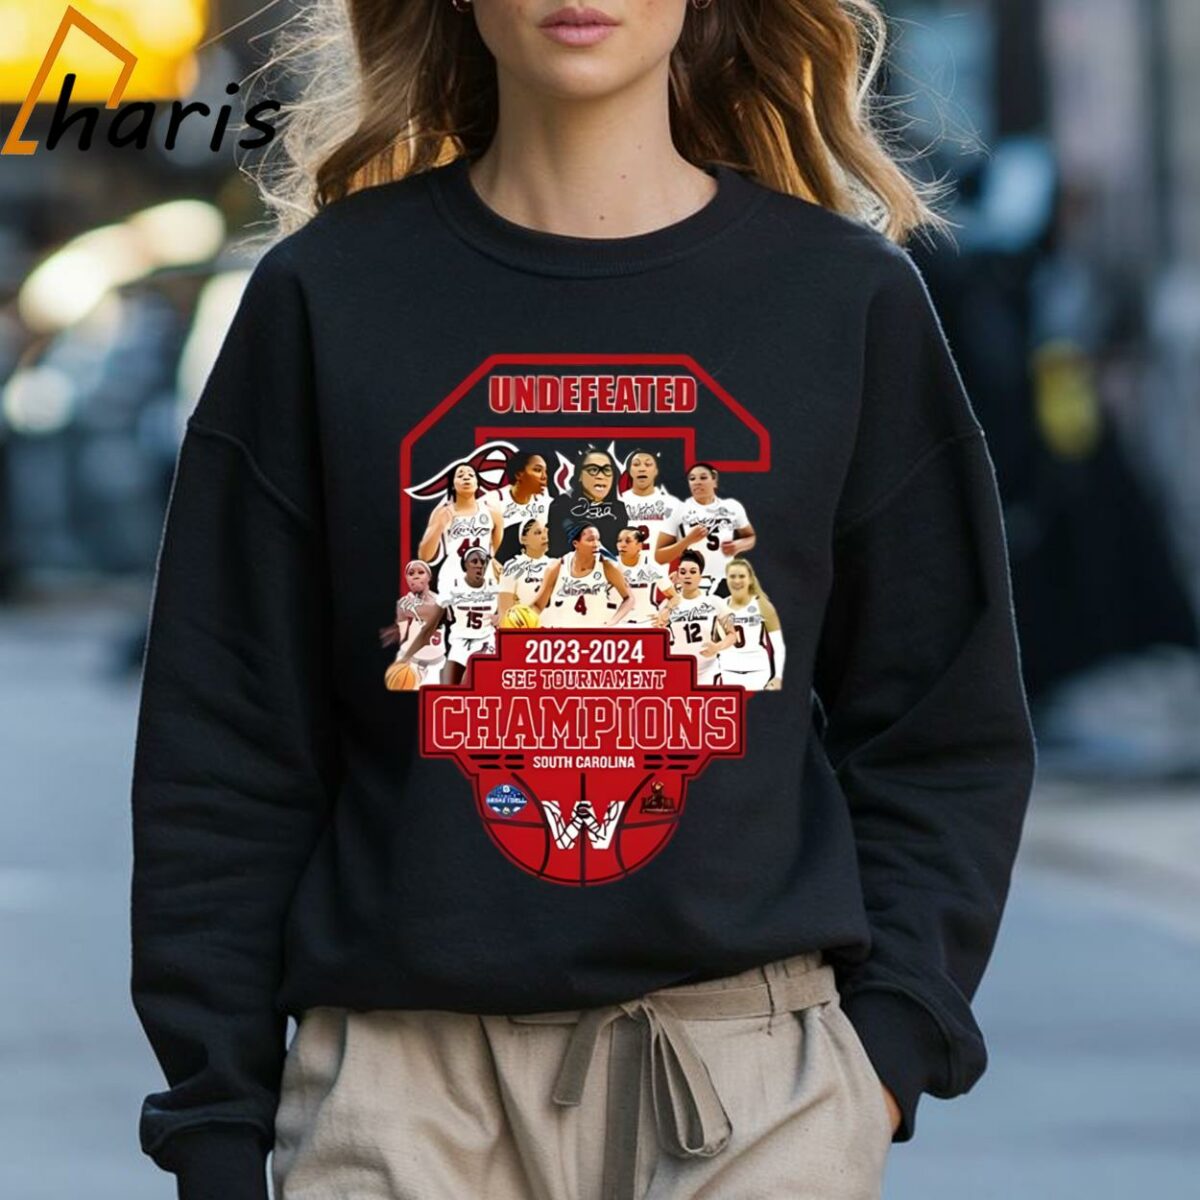 South Carolina Gamecocks NCAA Womens Basketball Tournament Champions 2023 2024 Shirt 3 Sweatshirt